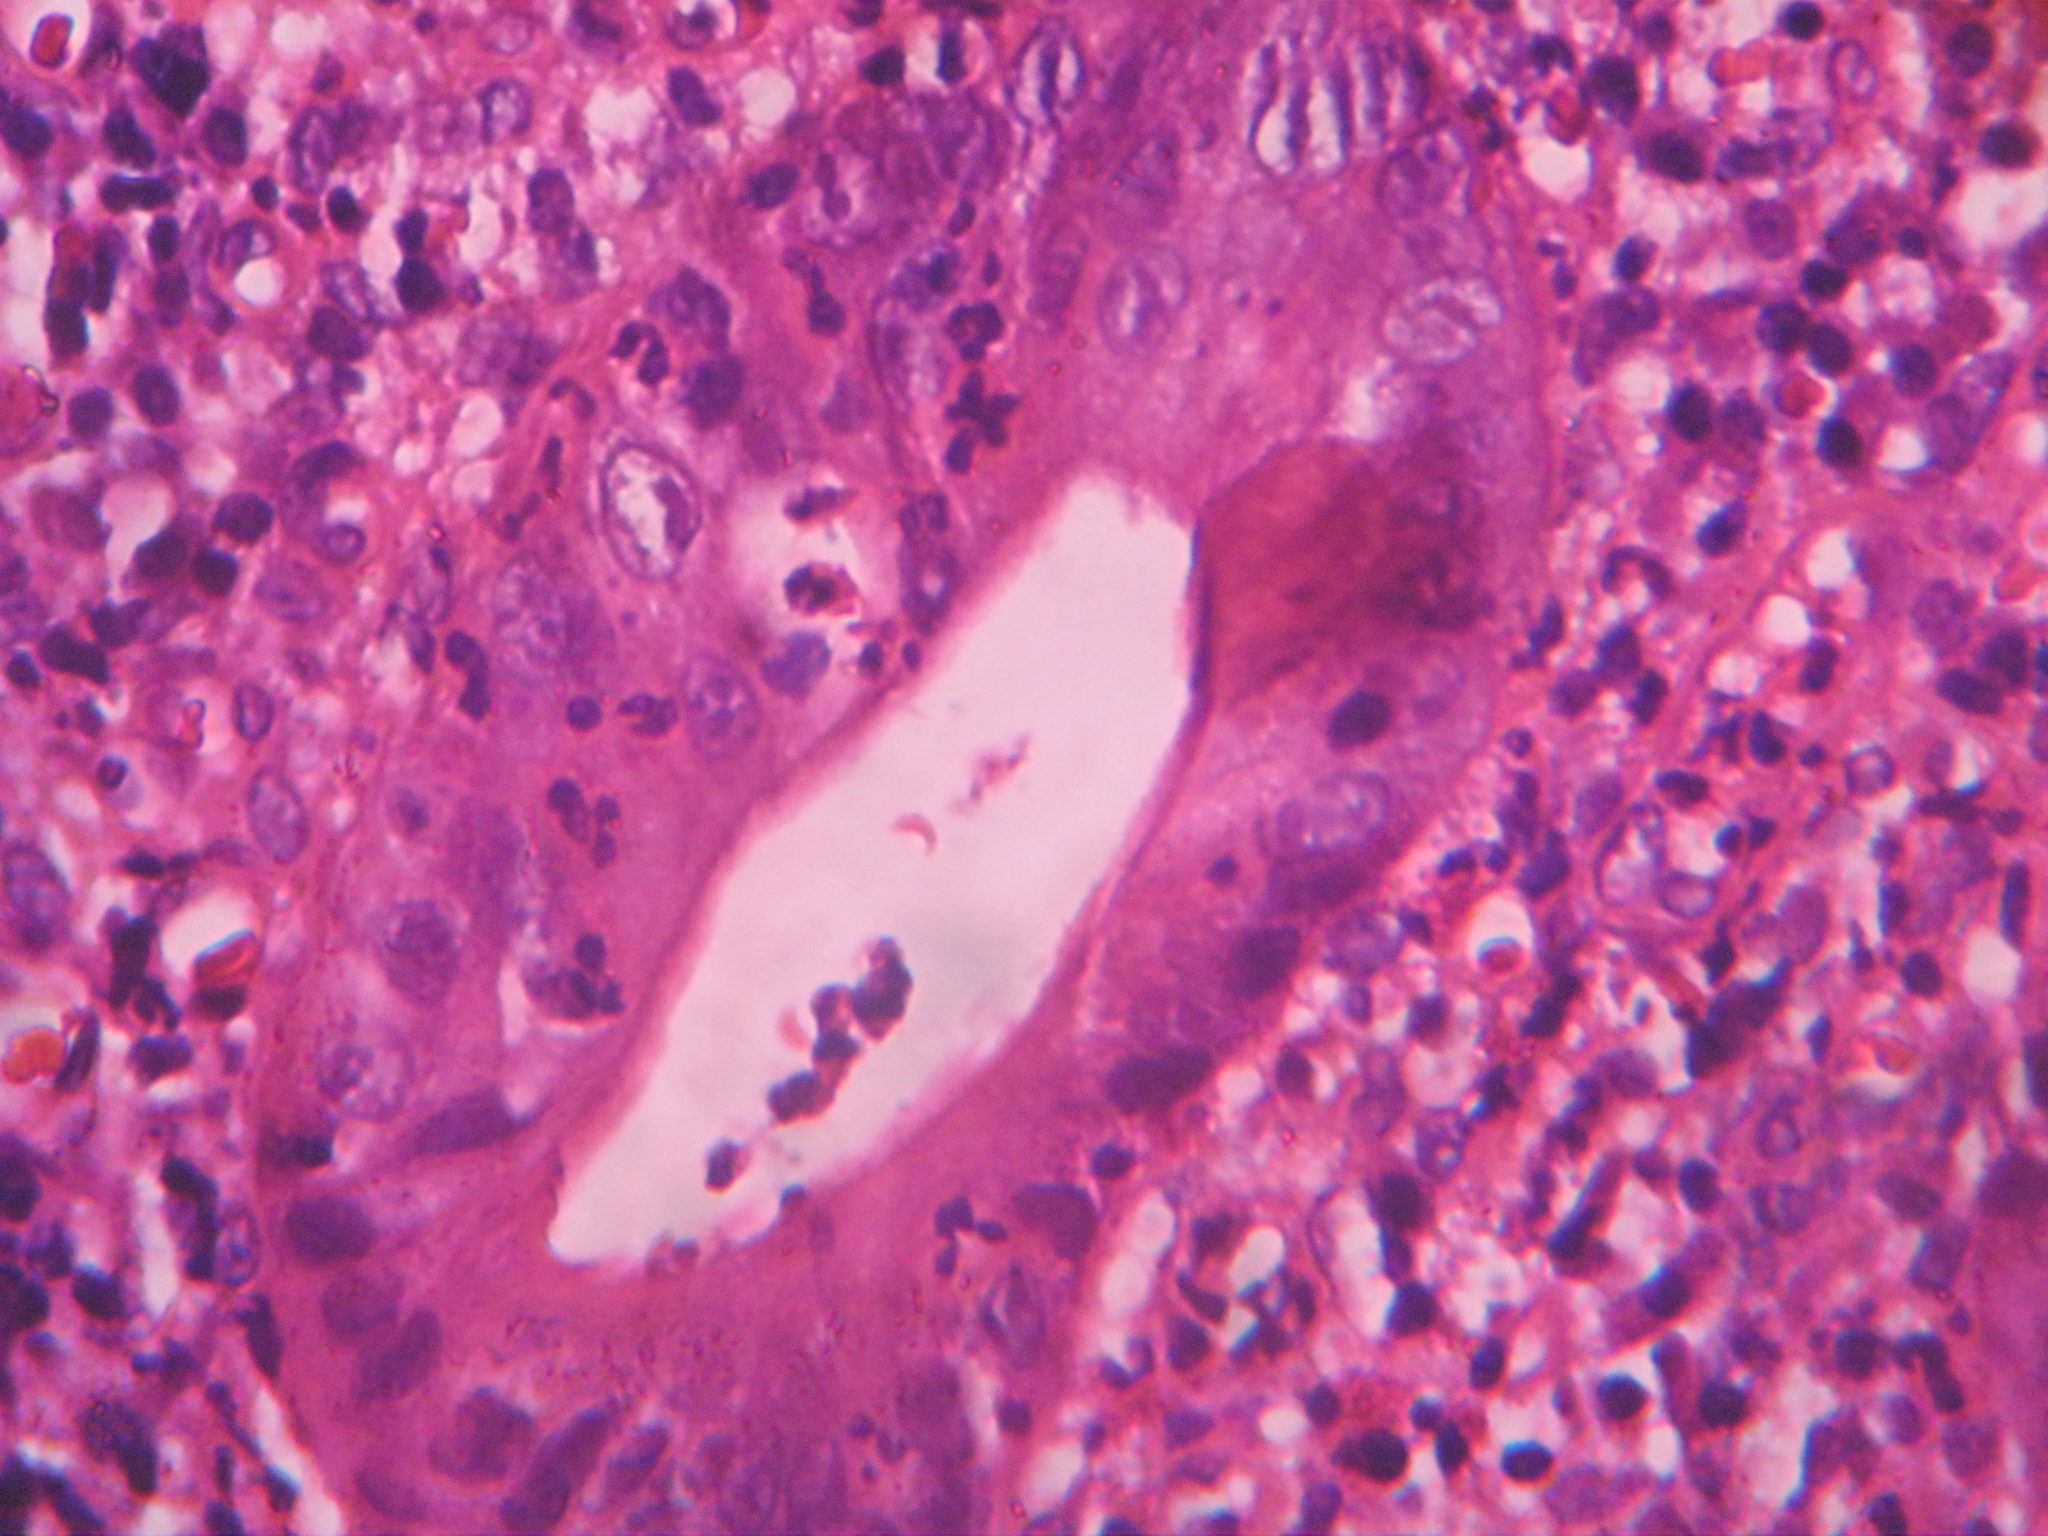 Ulcerative Colitis Histopathologyguru 8298